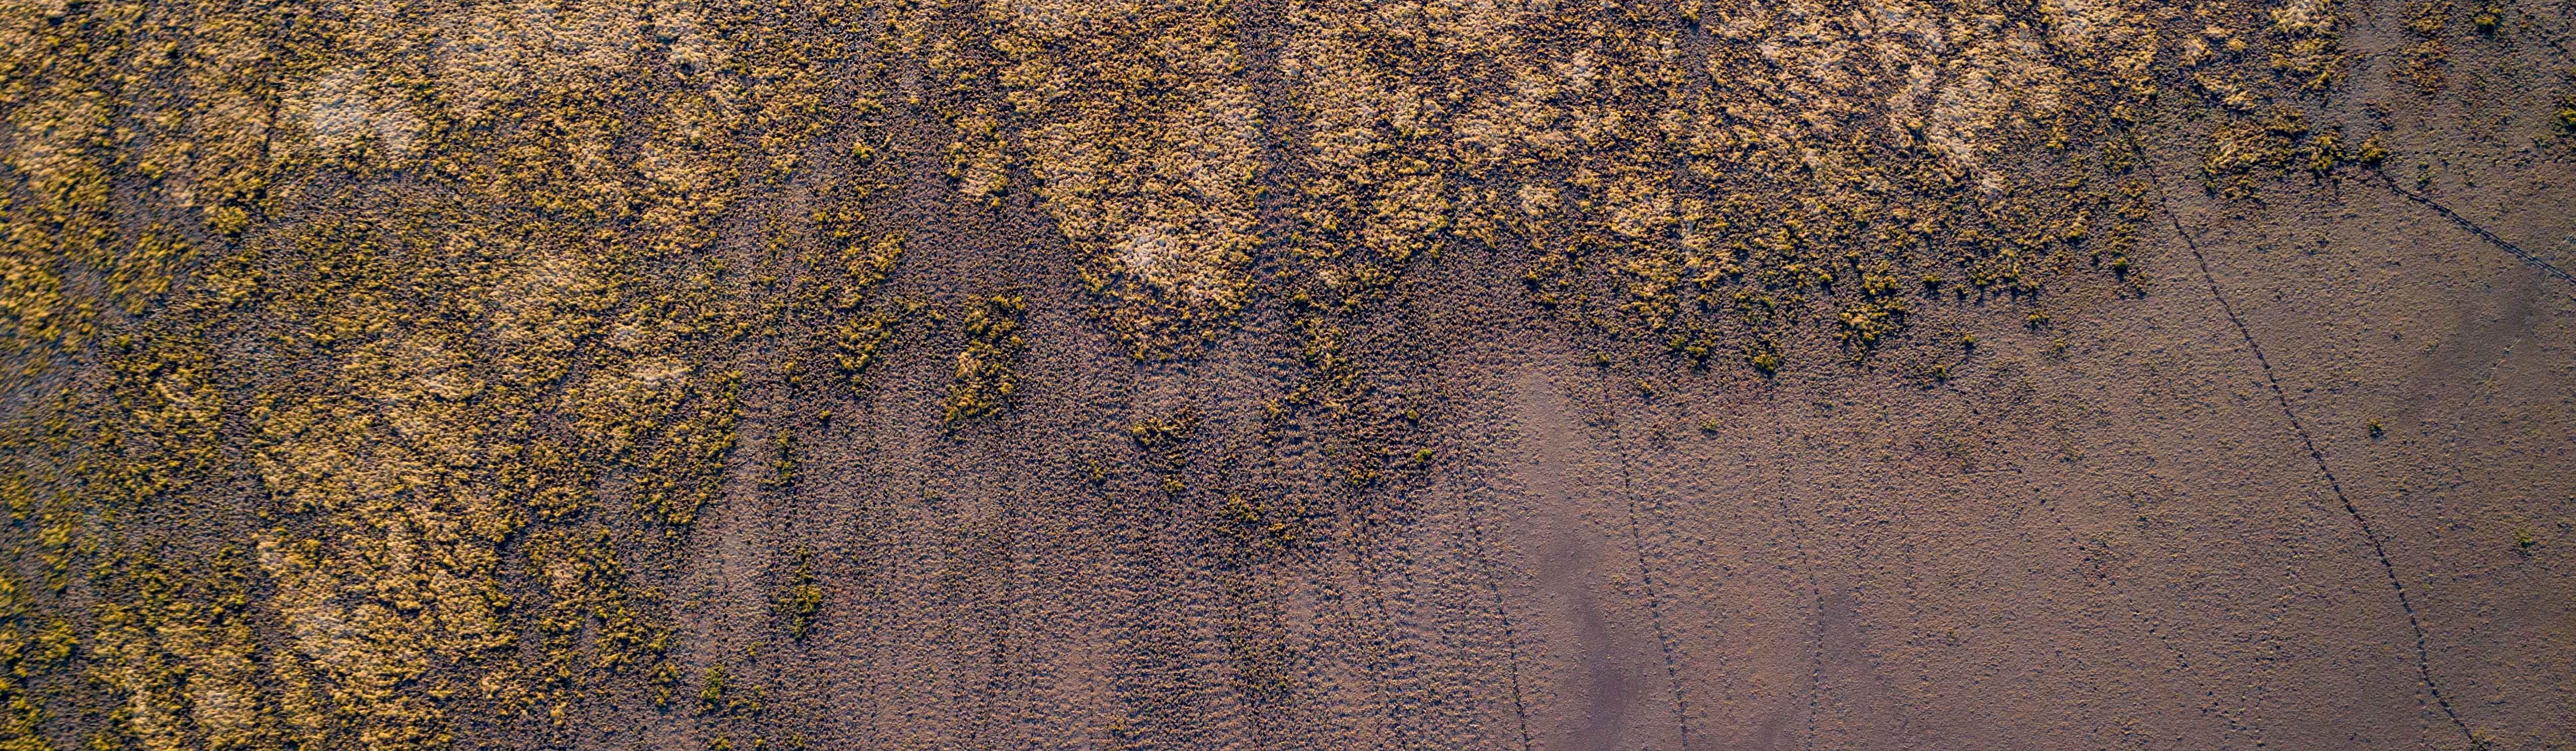 Aerial photo across Clarence floodplain backswamp showing kangaroo tracks